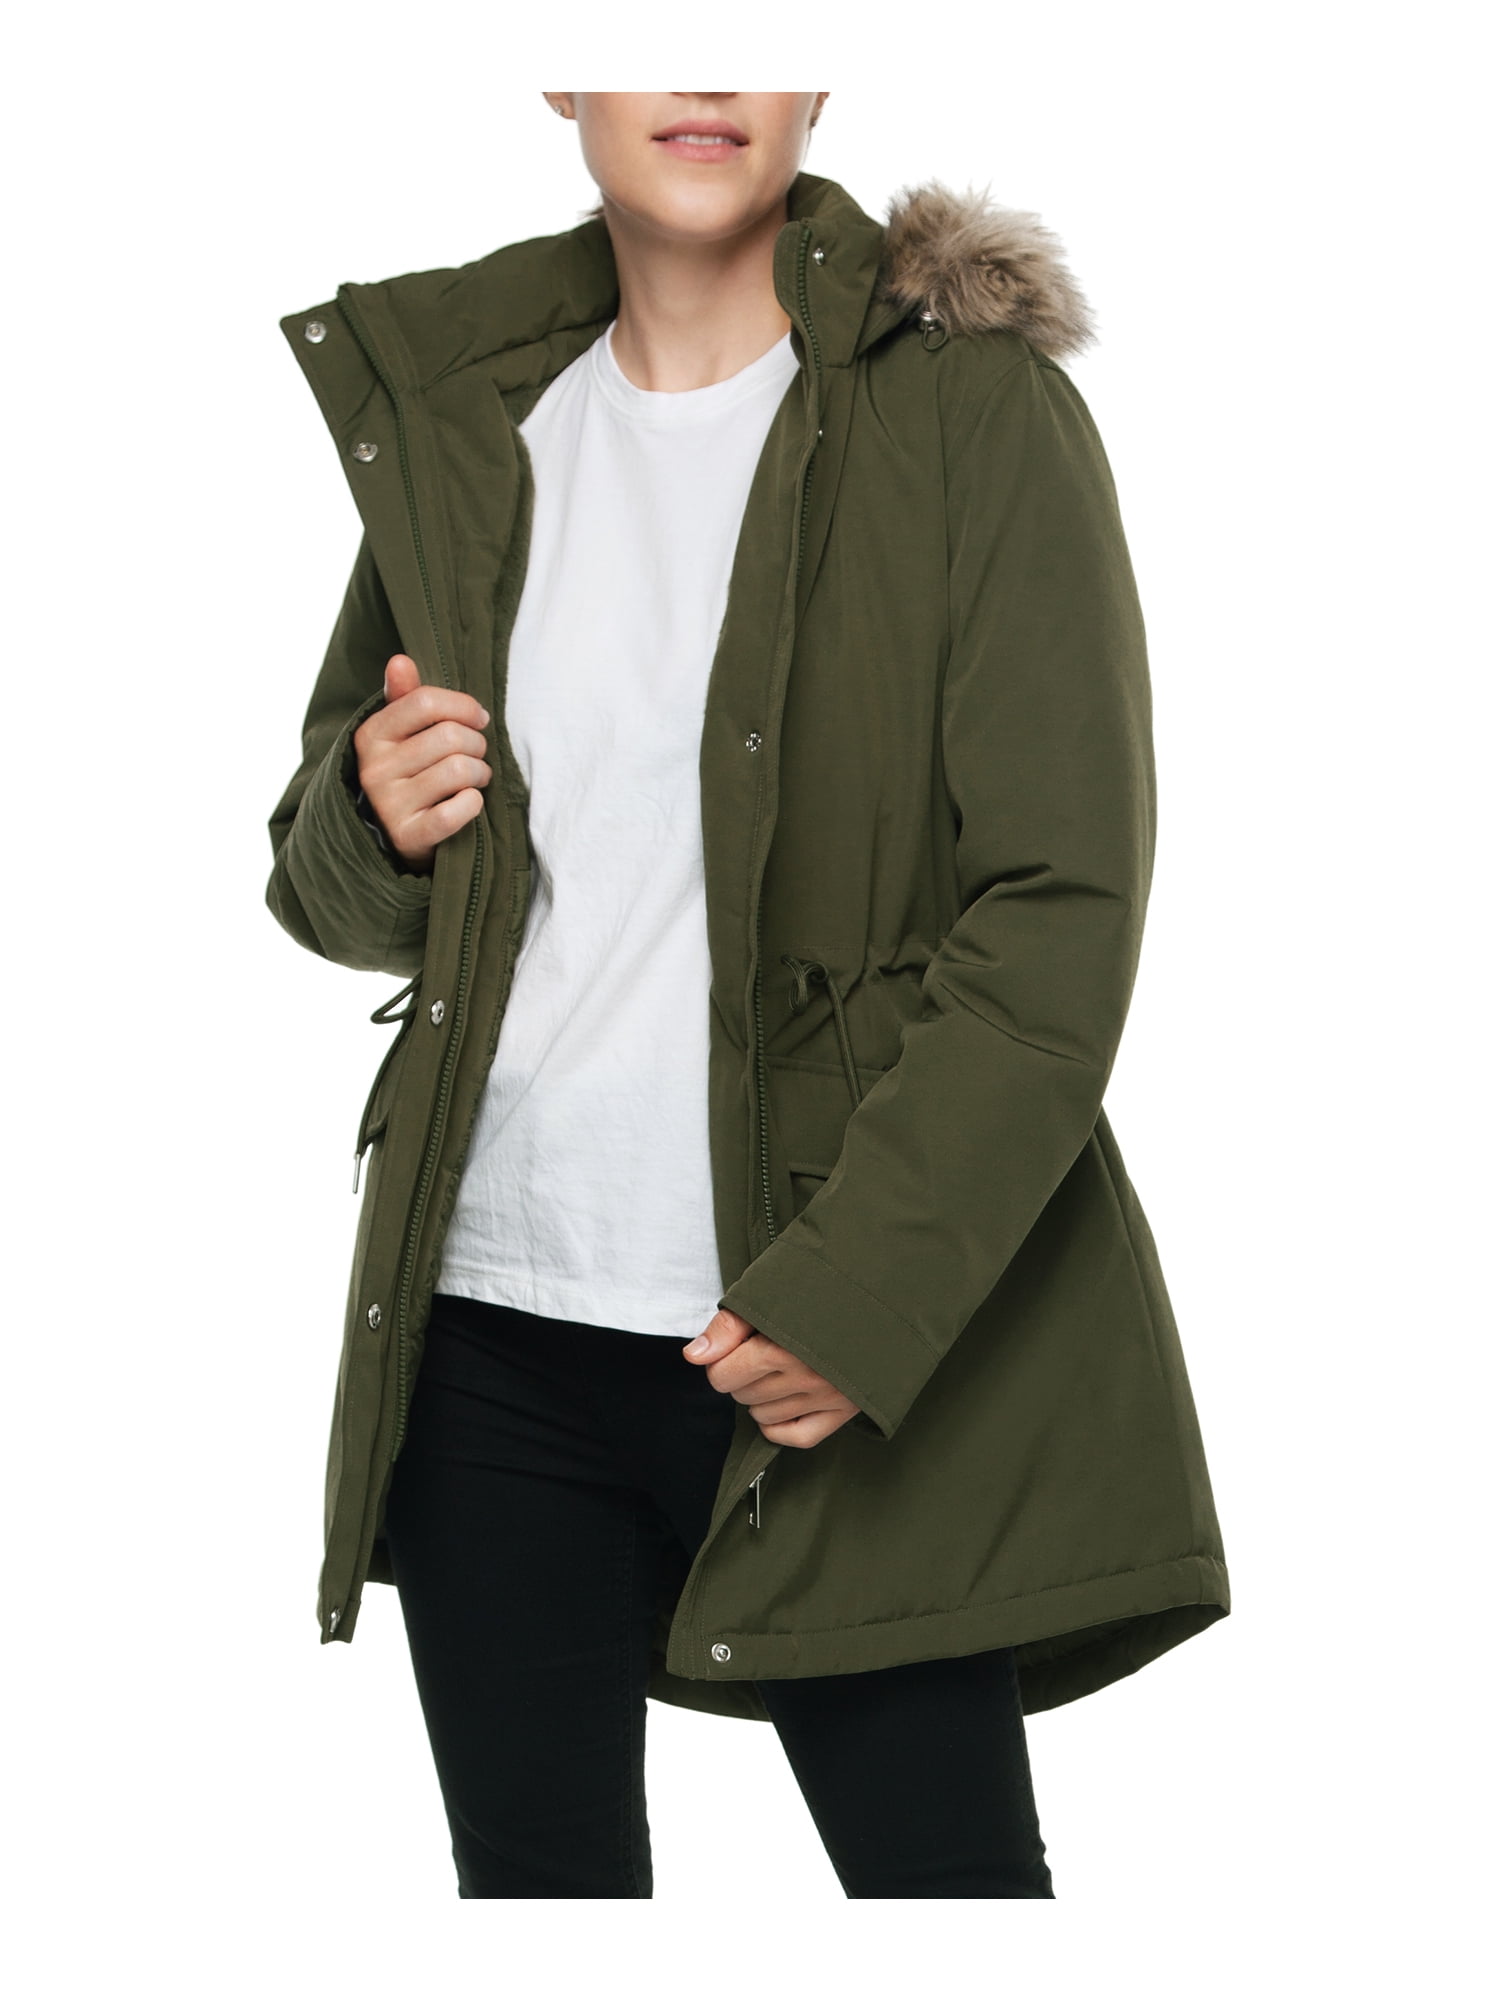 Faux Fur Lined Winter Jacket Best Sale | bellvalefarms.com